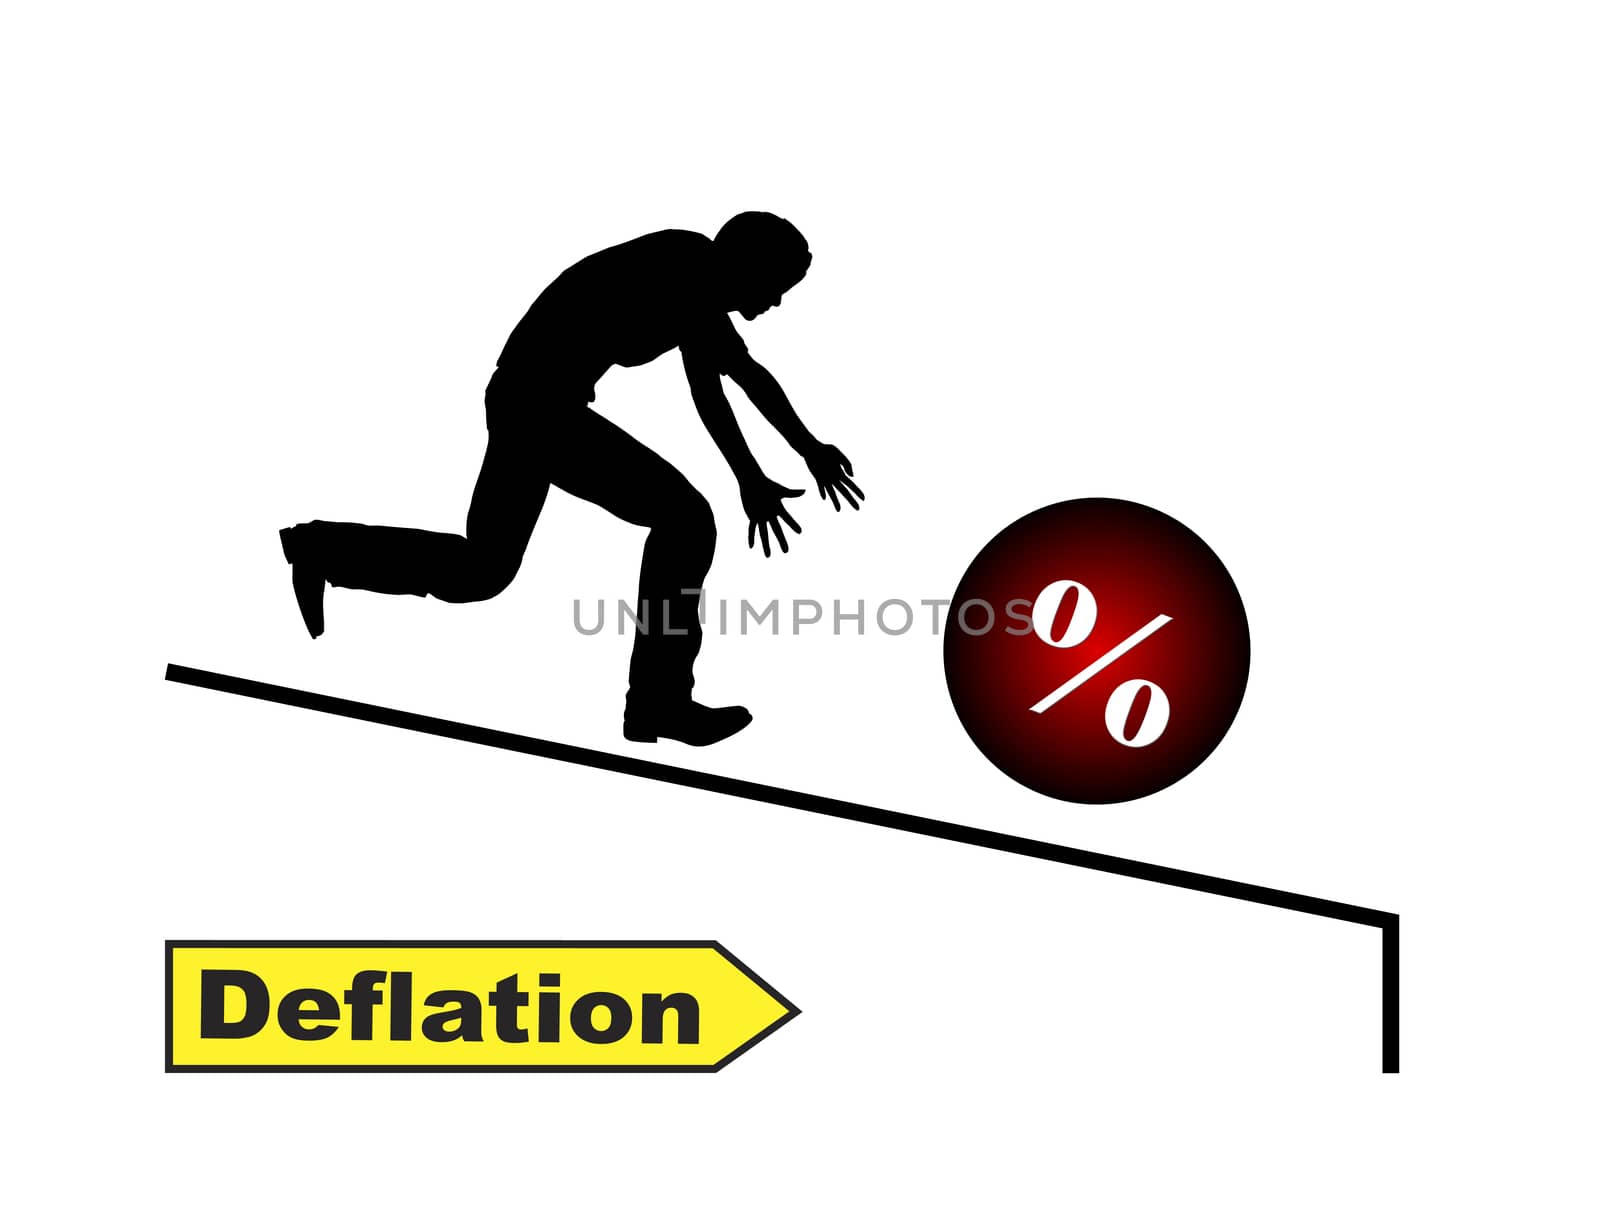 Deflation by Bambara